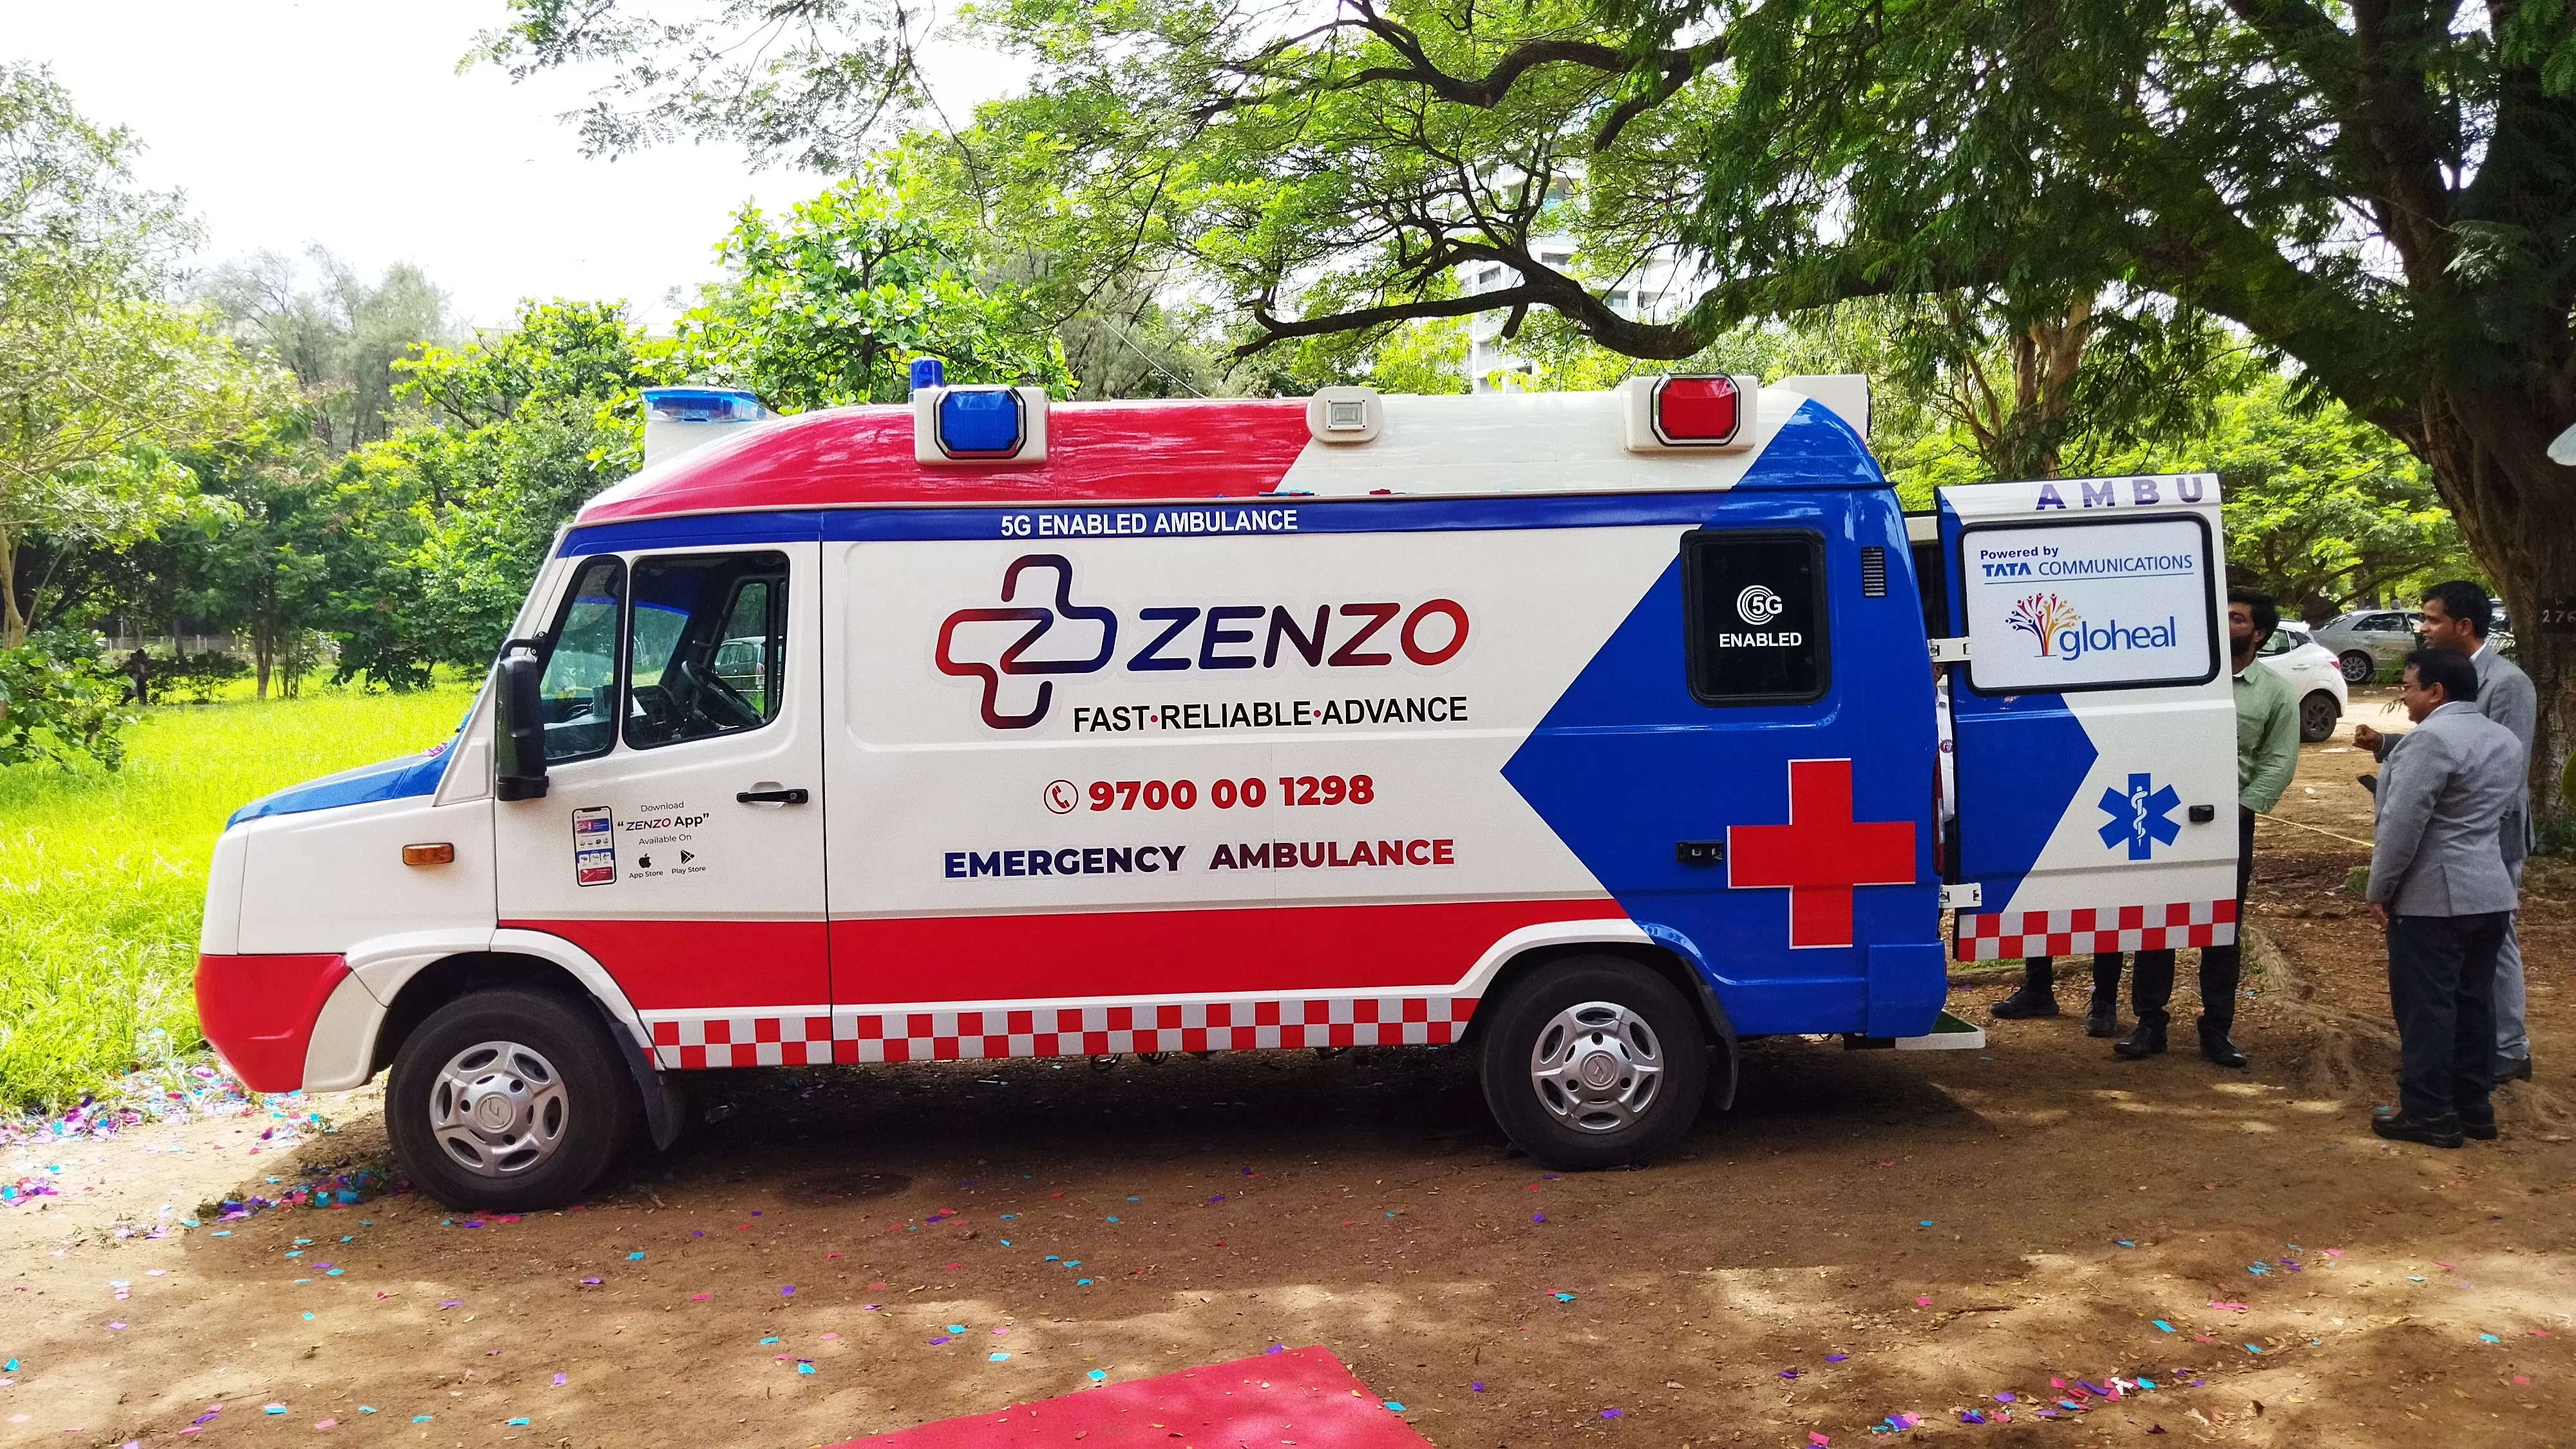 In Mumbai, Zenzo debuts the advanced 5G ambulance service, Health